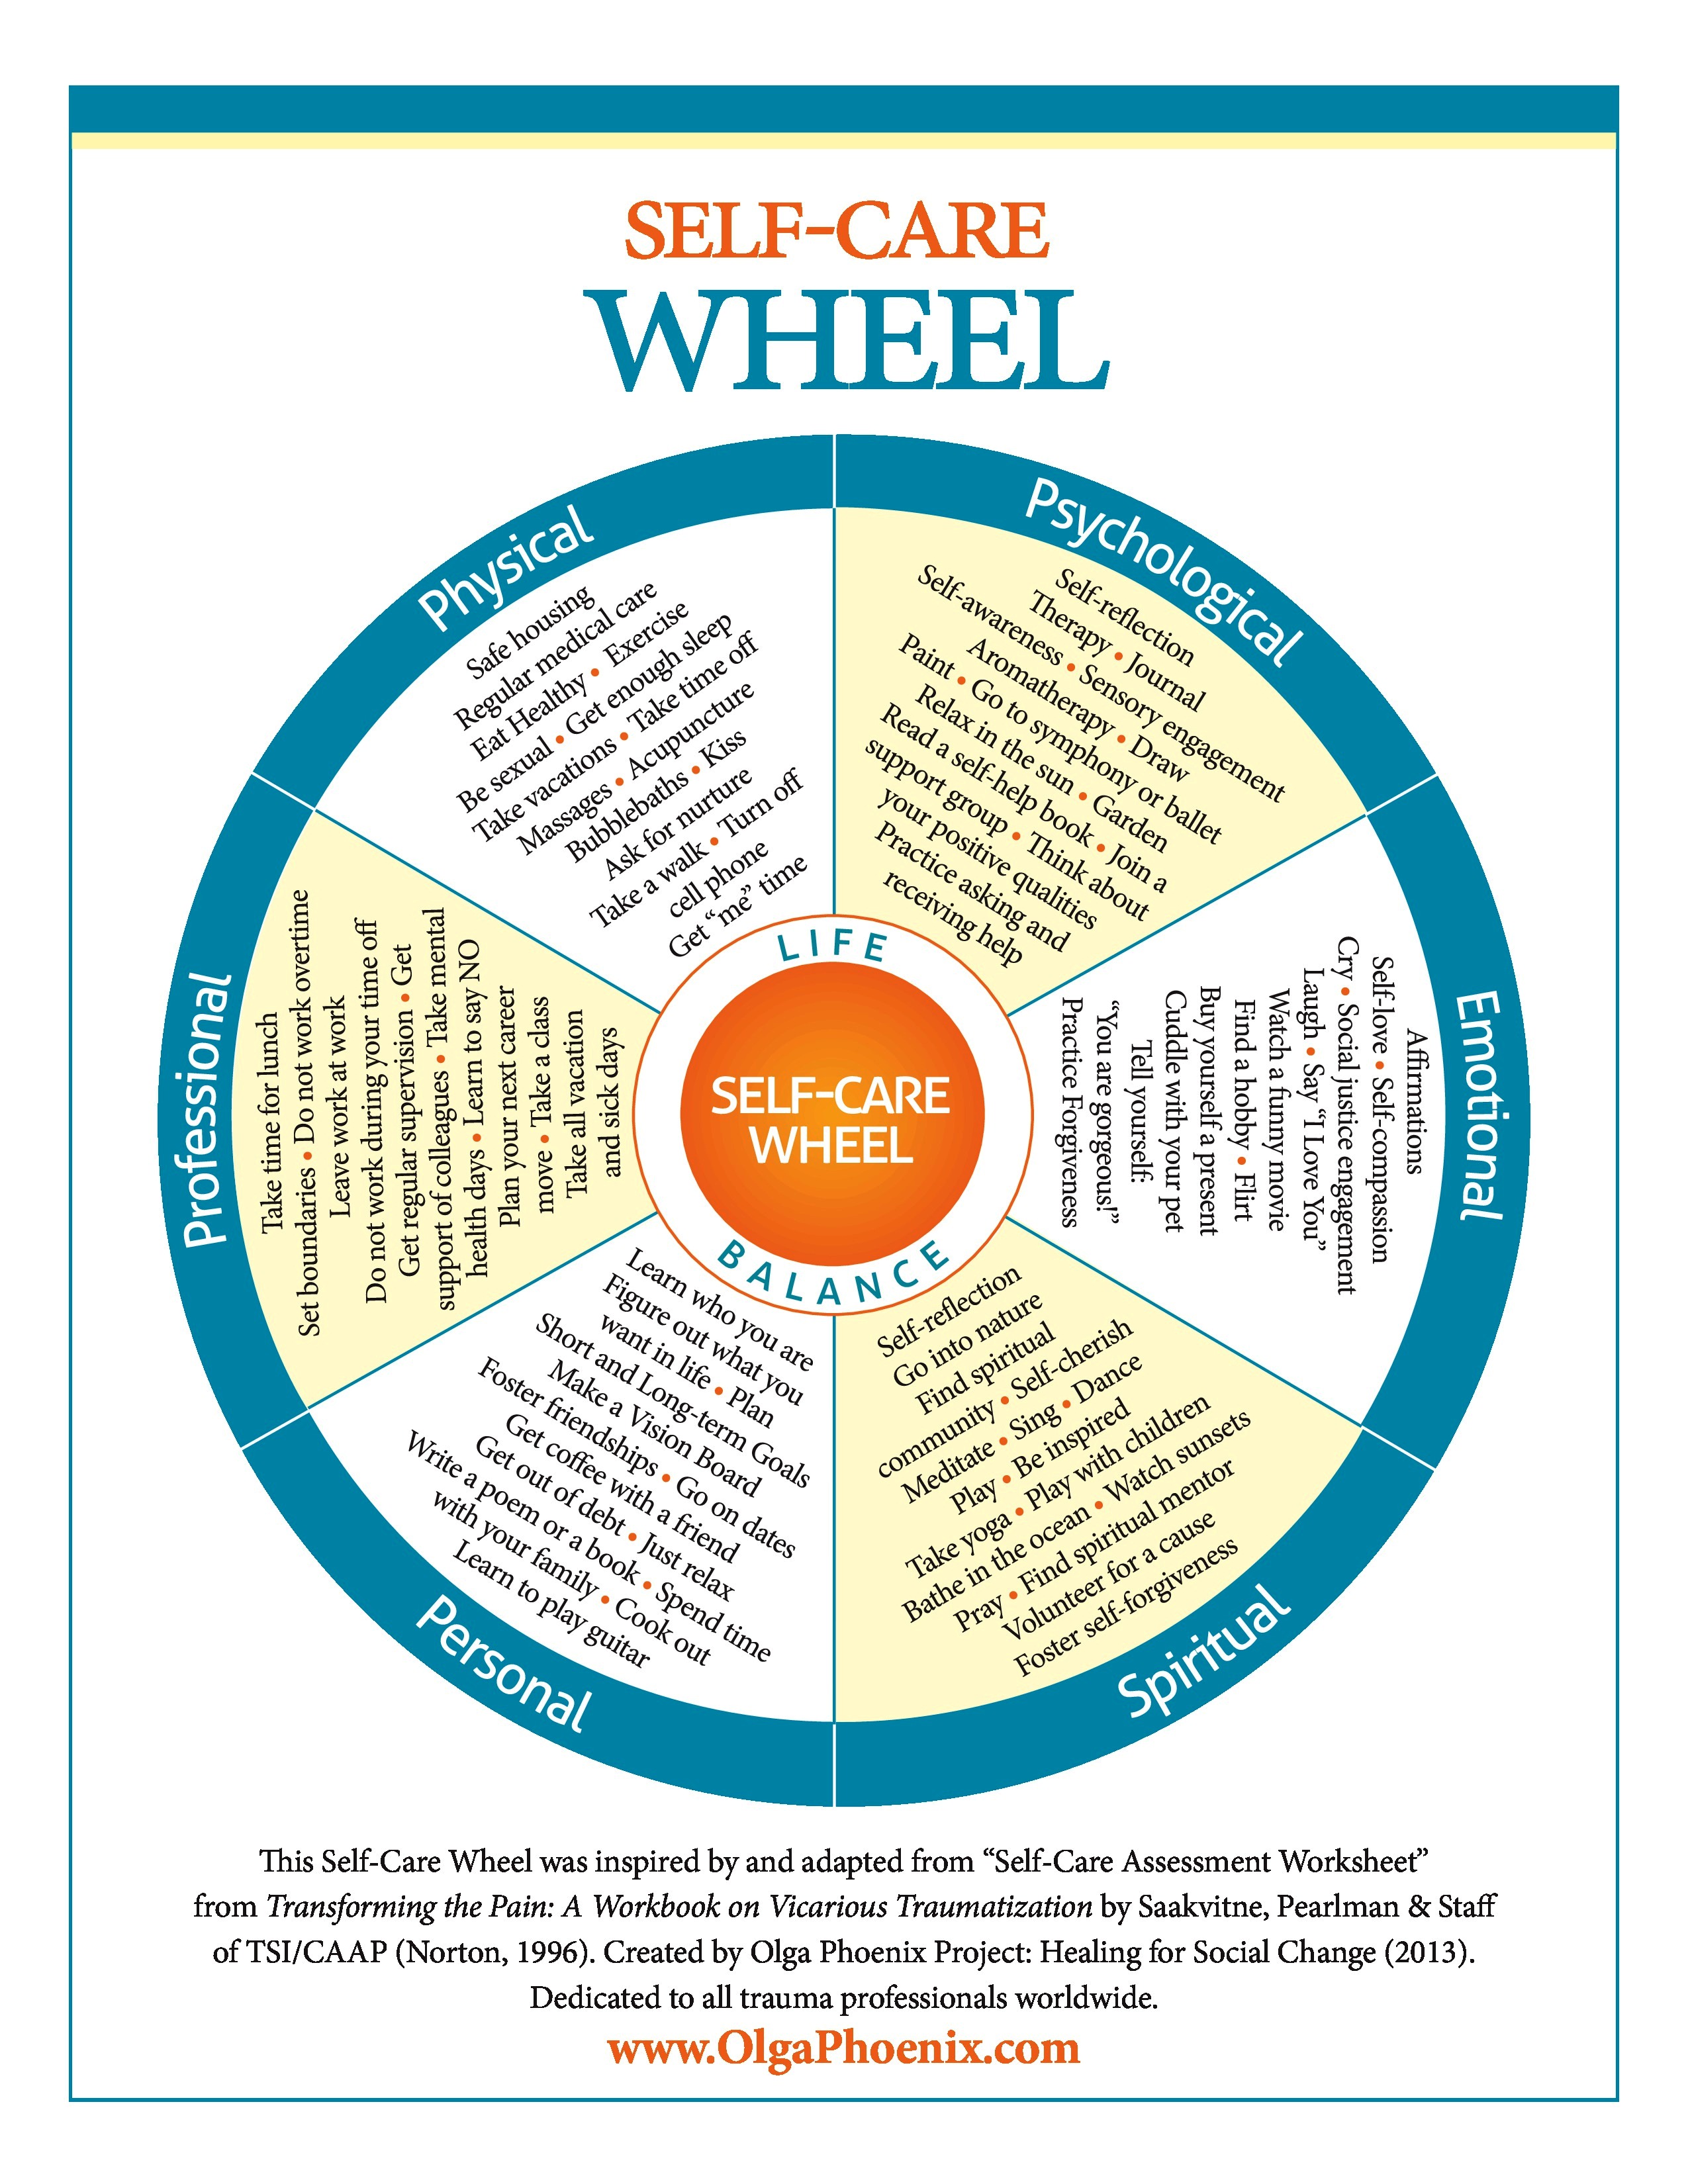 SelfCare Wheel Children's Health Alliance of Wisconsin